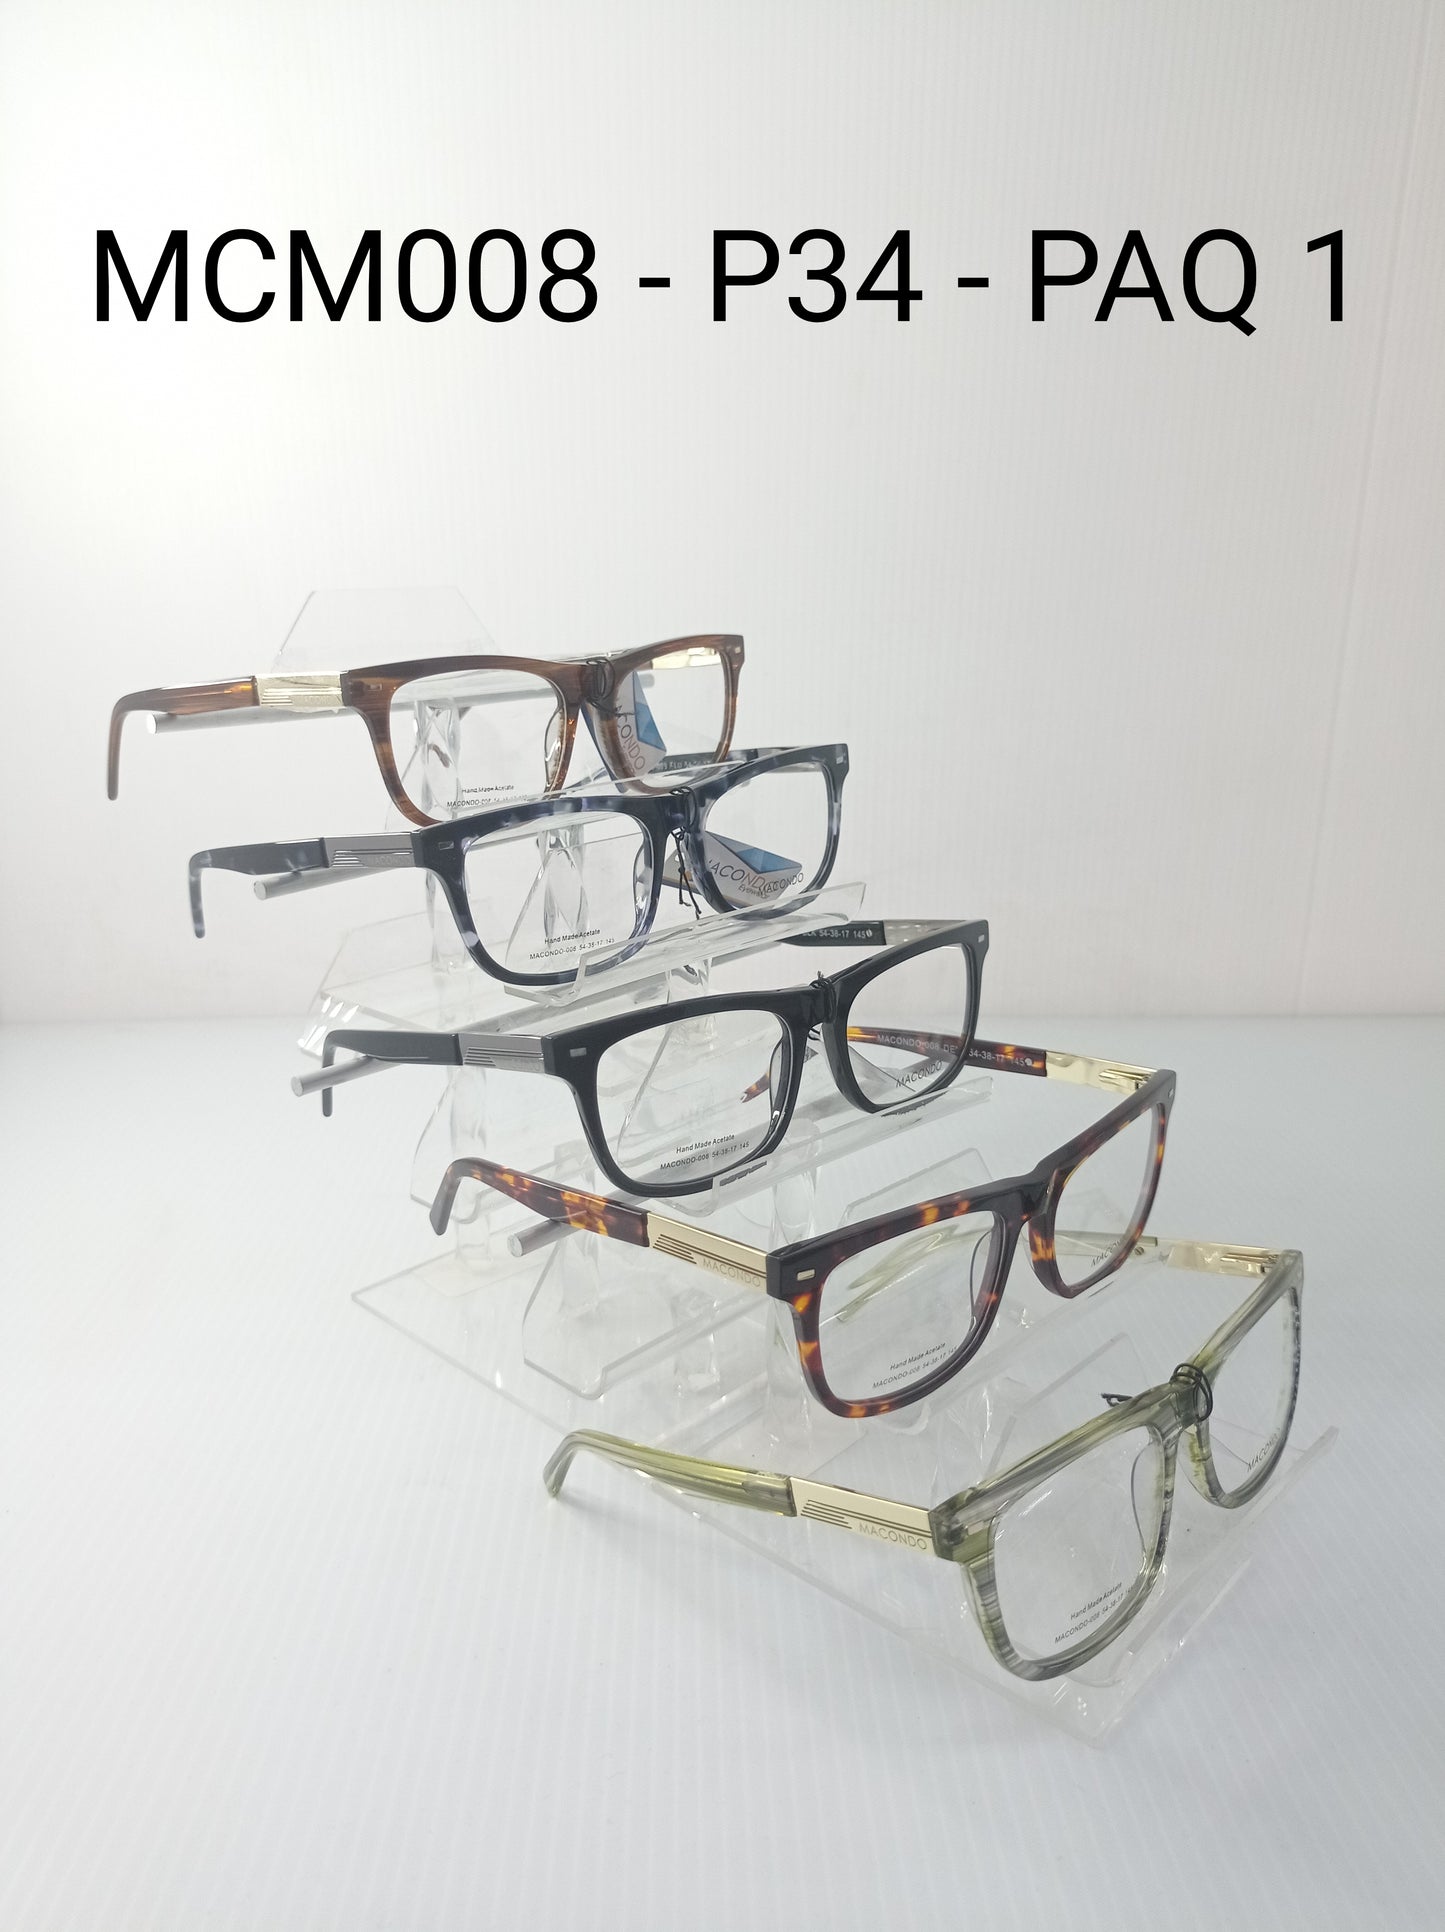 MACONDO - MCM008 - P34